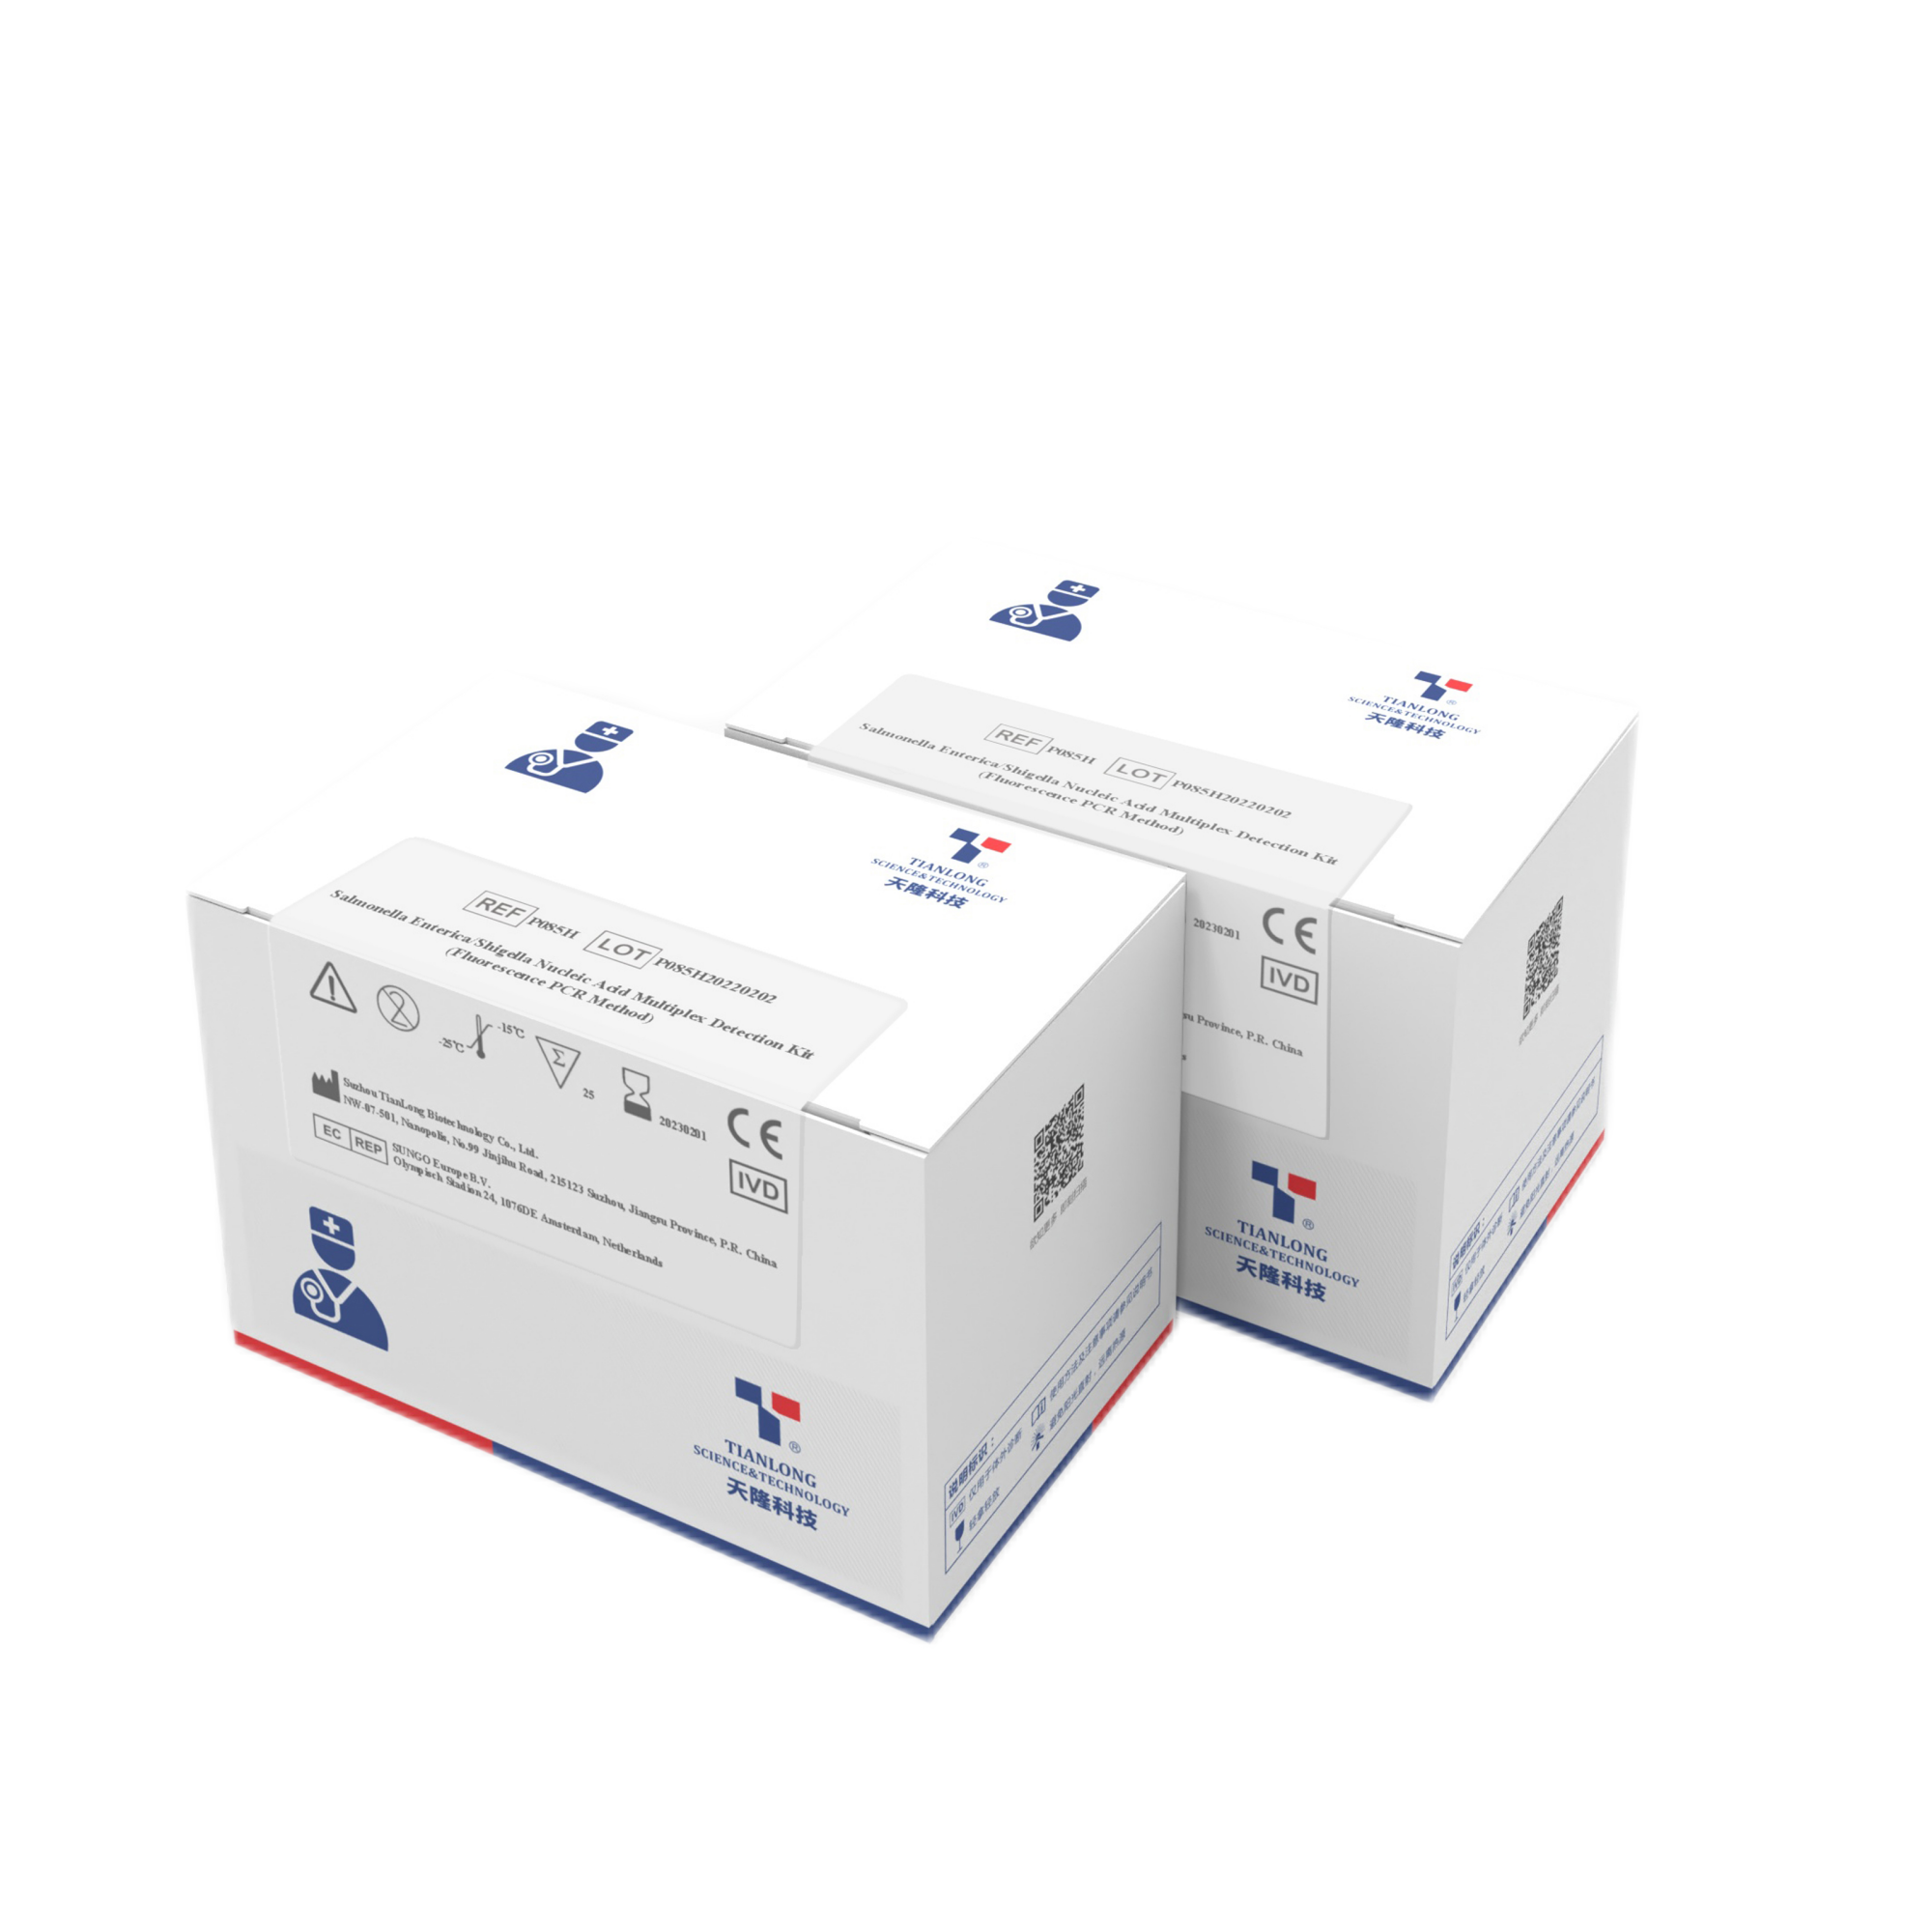 P085H - Salmonella Enterica/Shigella Nucleic Acid Multiplex Detection Kit